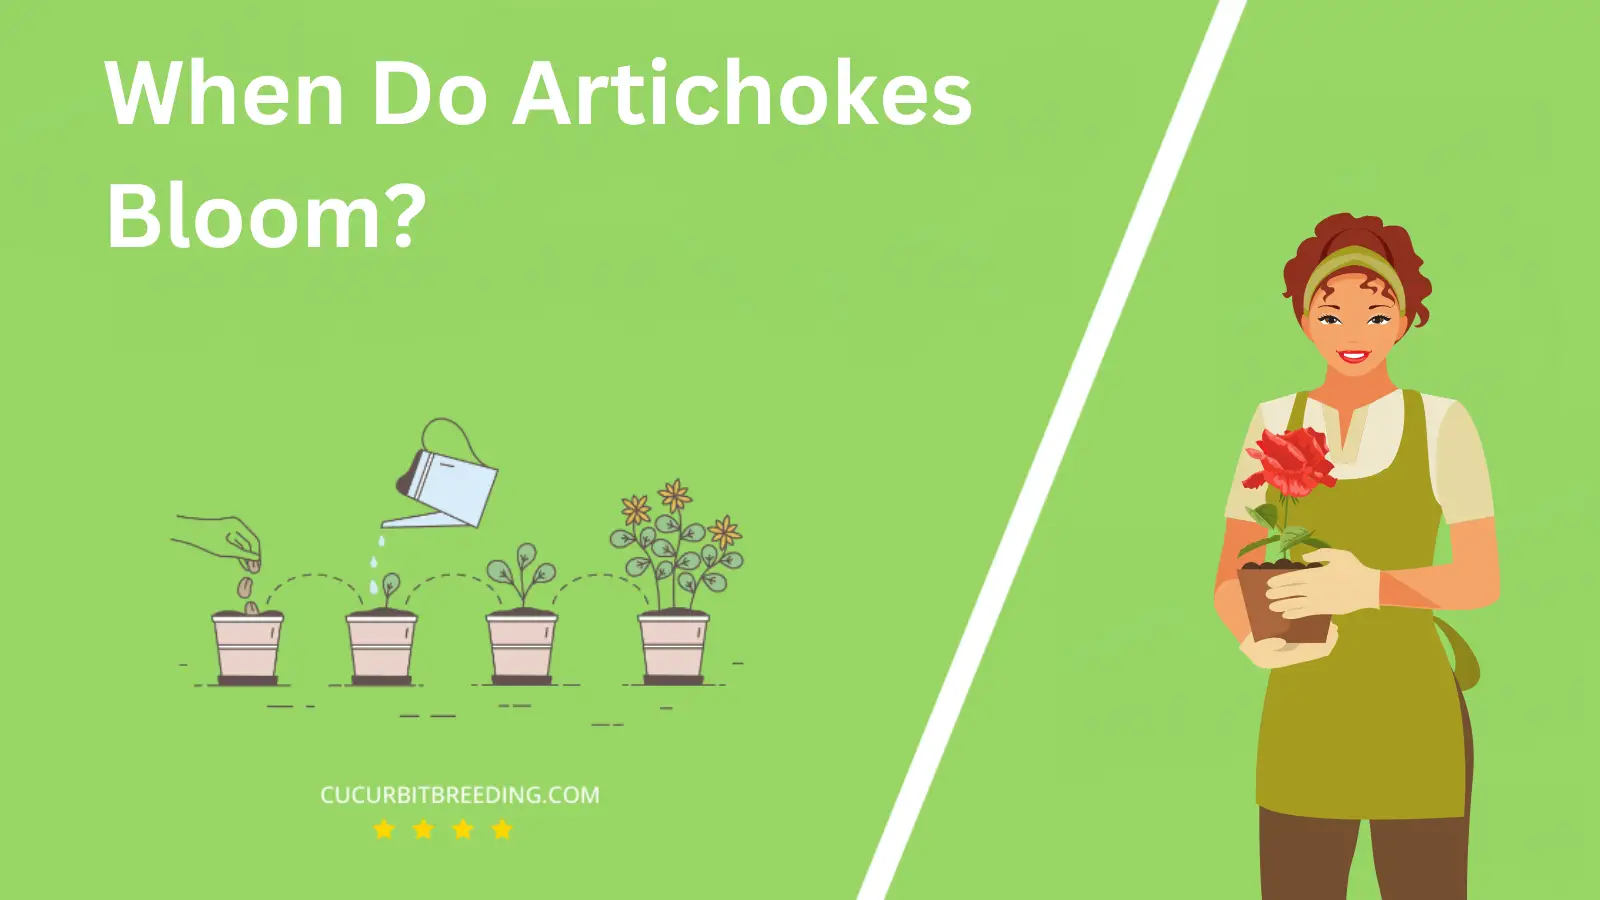 When Do Artichokes Bloom?